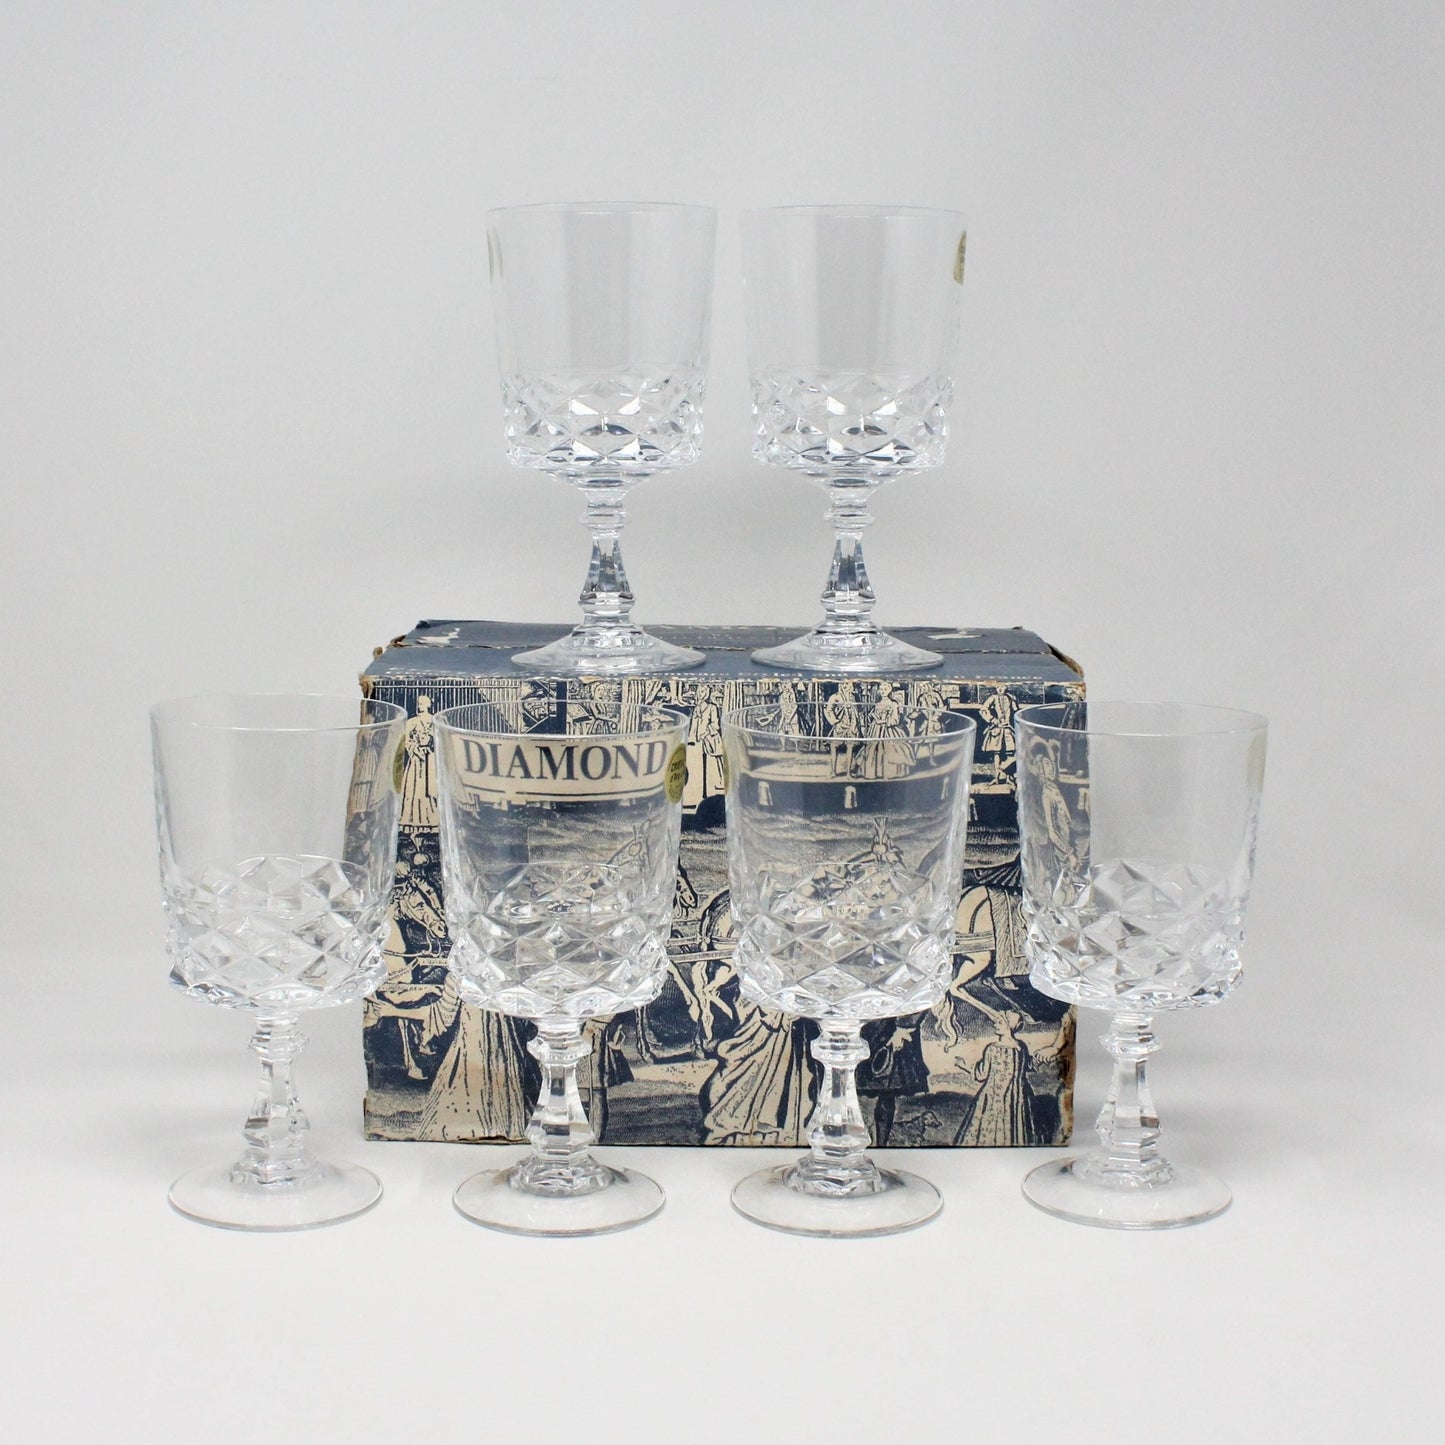 Water Goblets, Cristal d'Arques, Diamond, Set of 6, France, Vintage